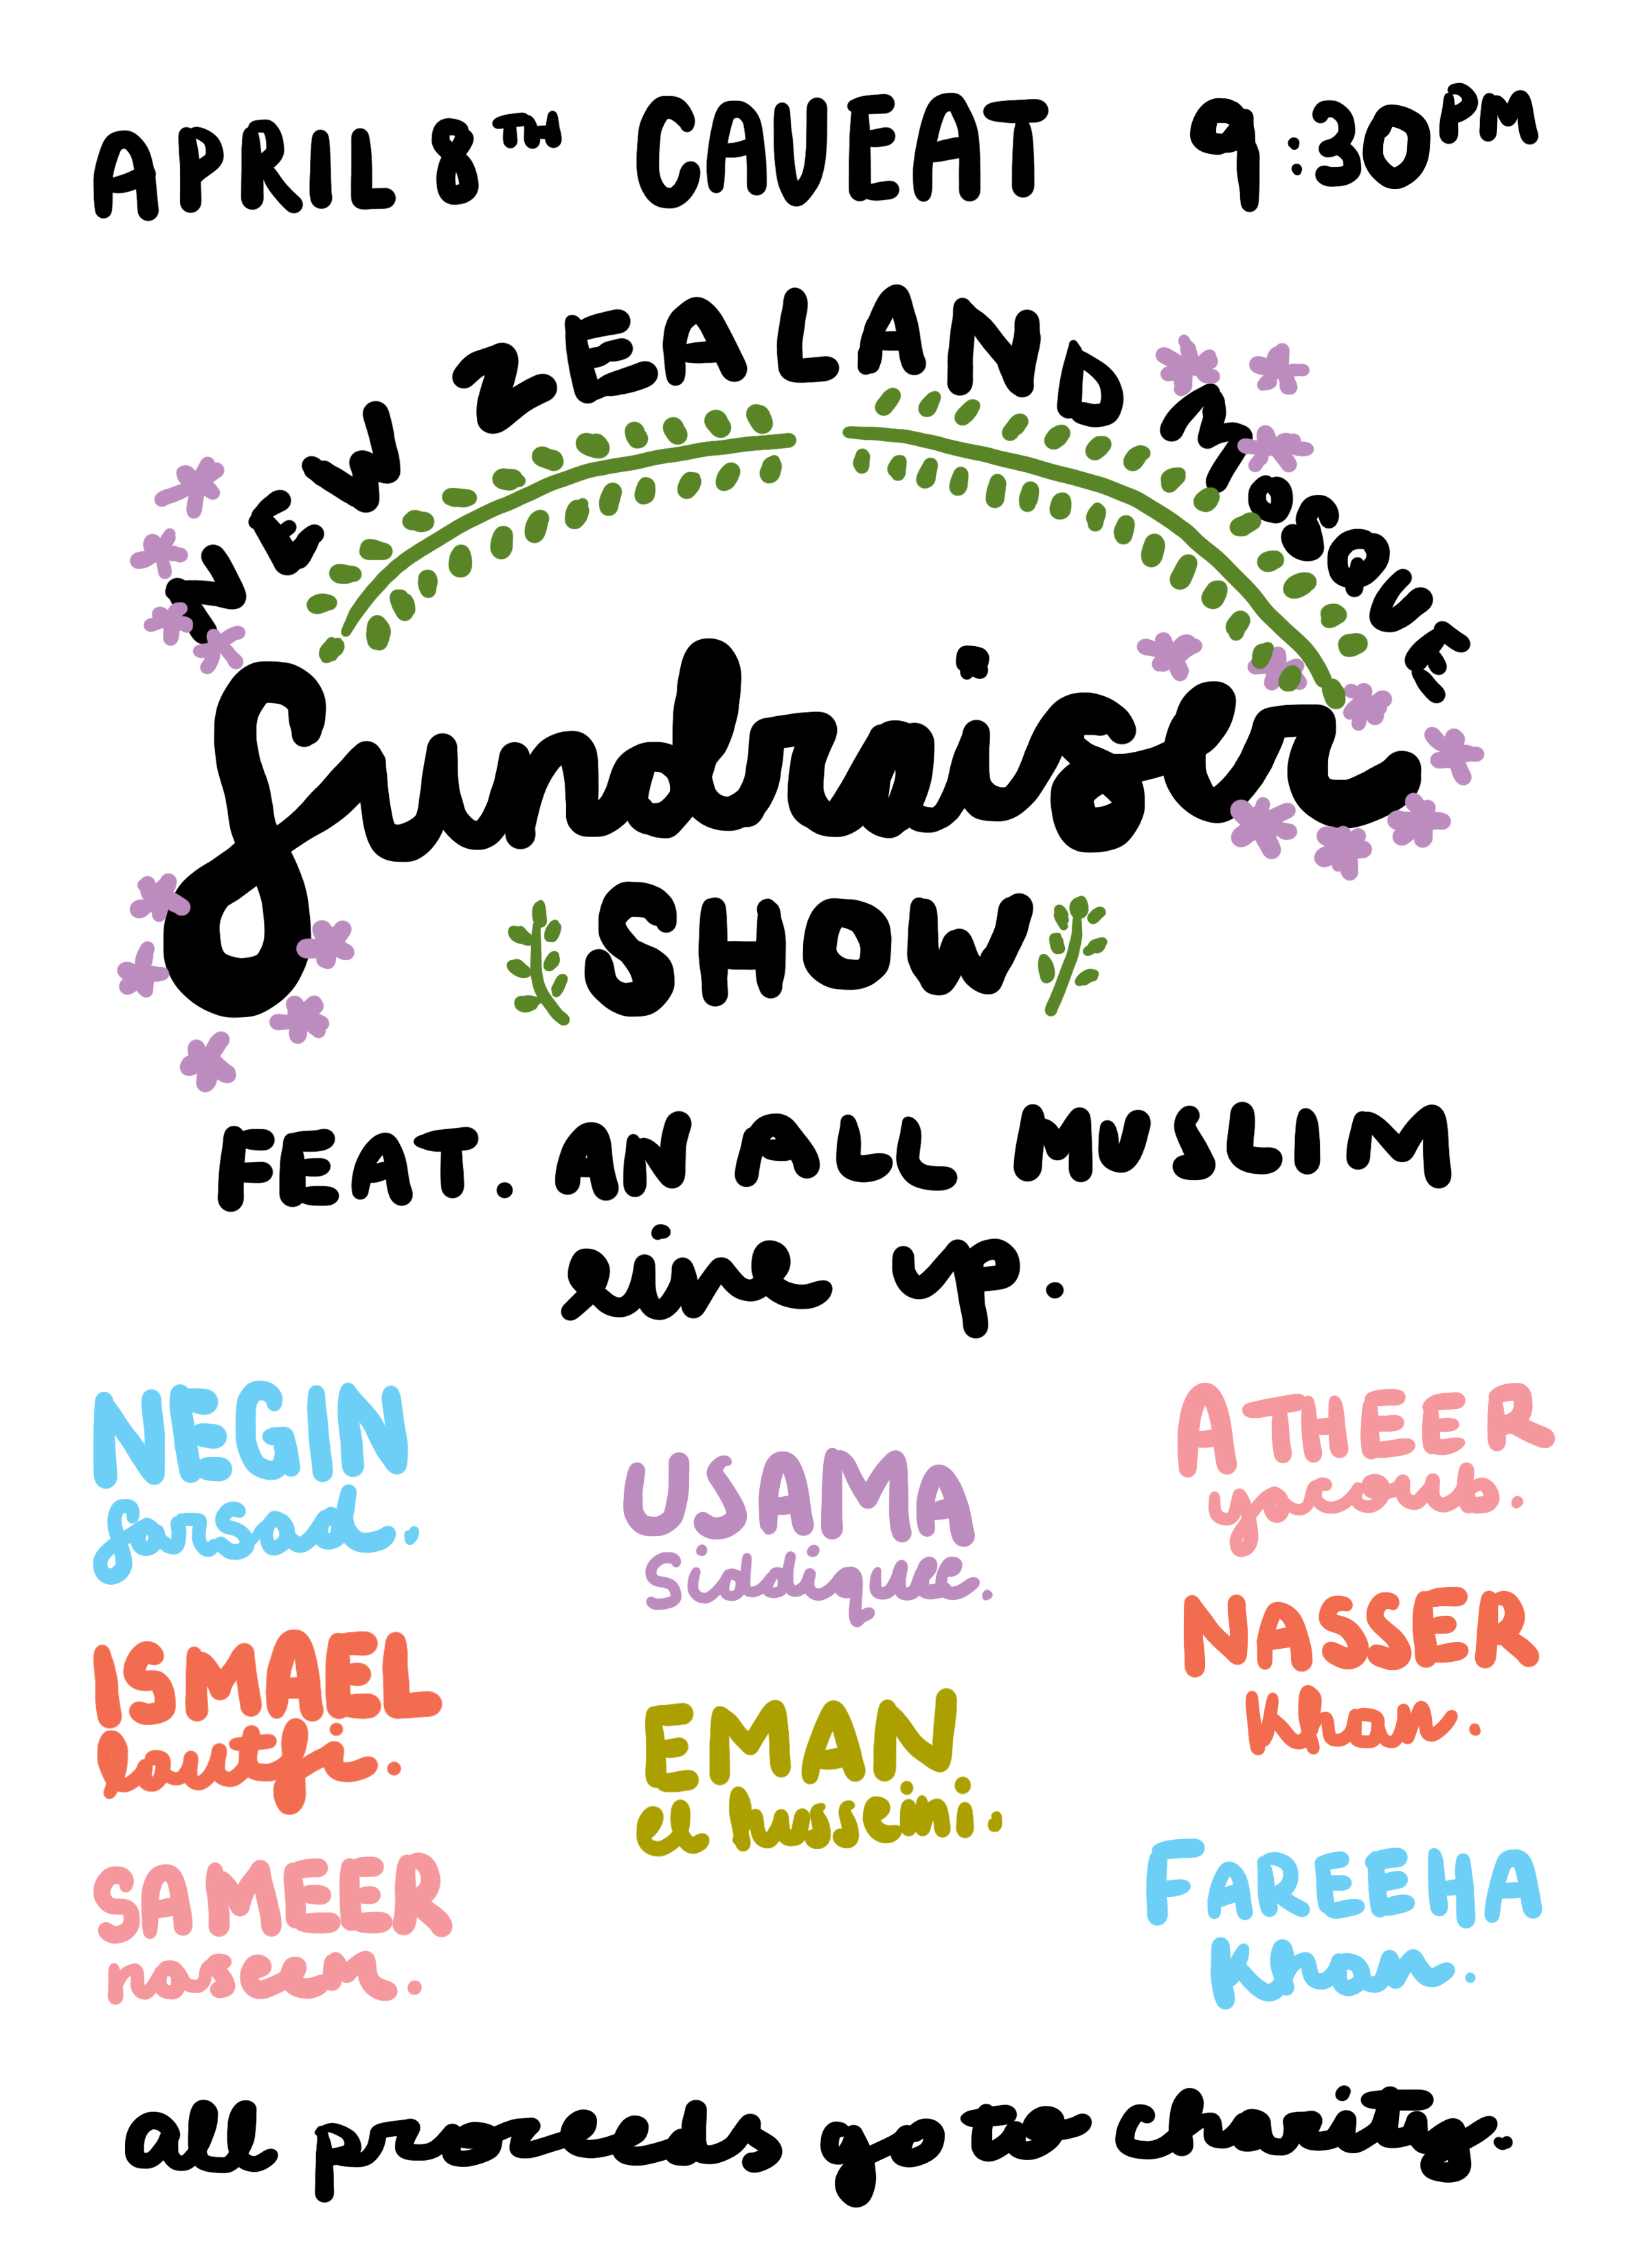 Muslim Fundraiser show.jpg